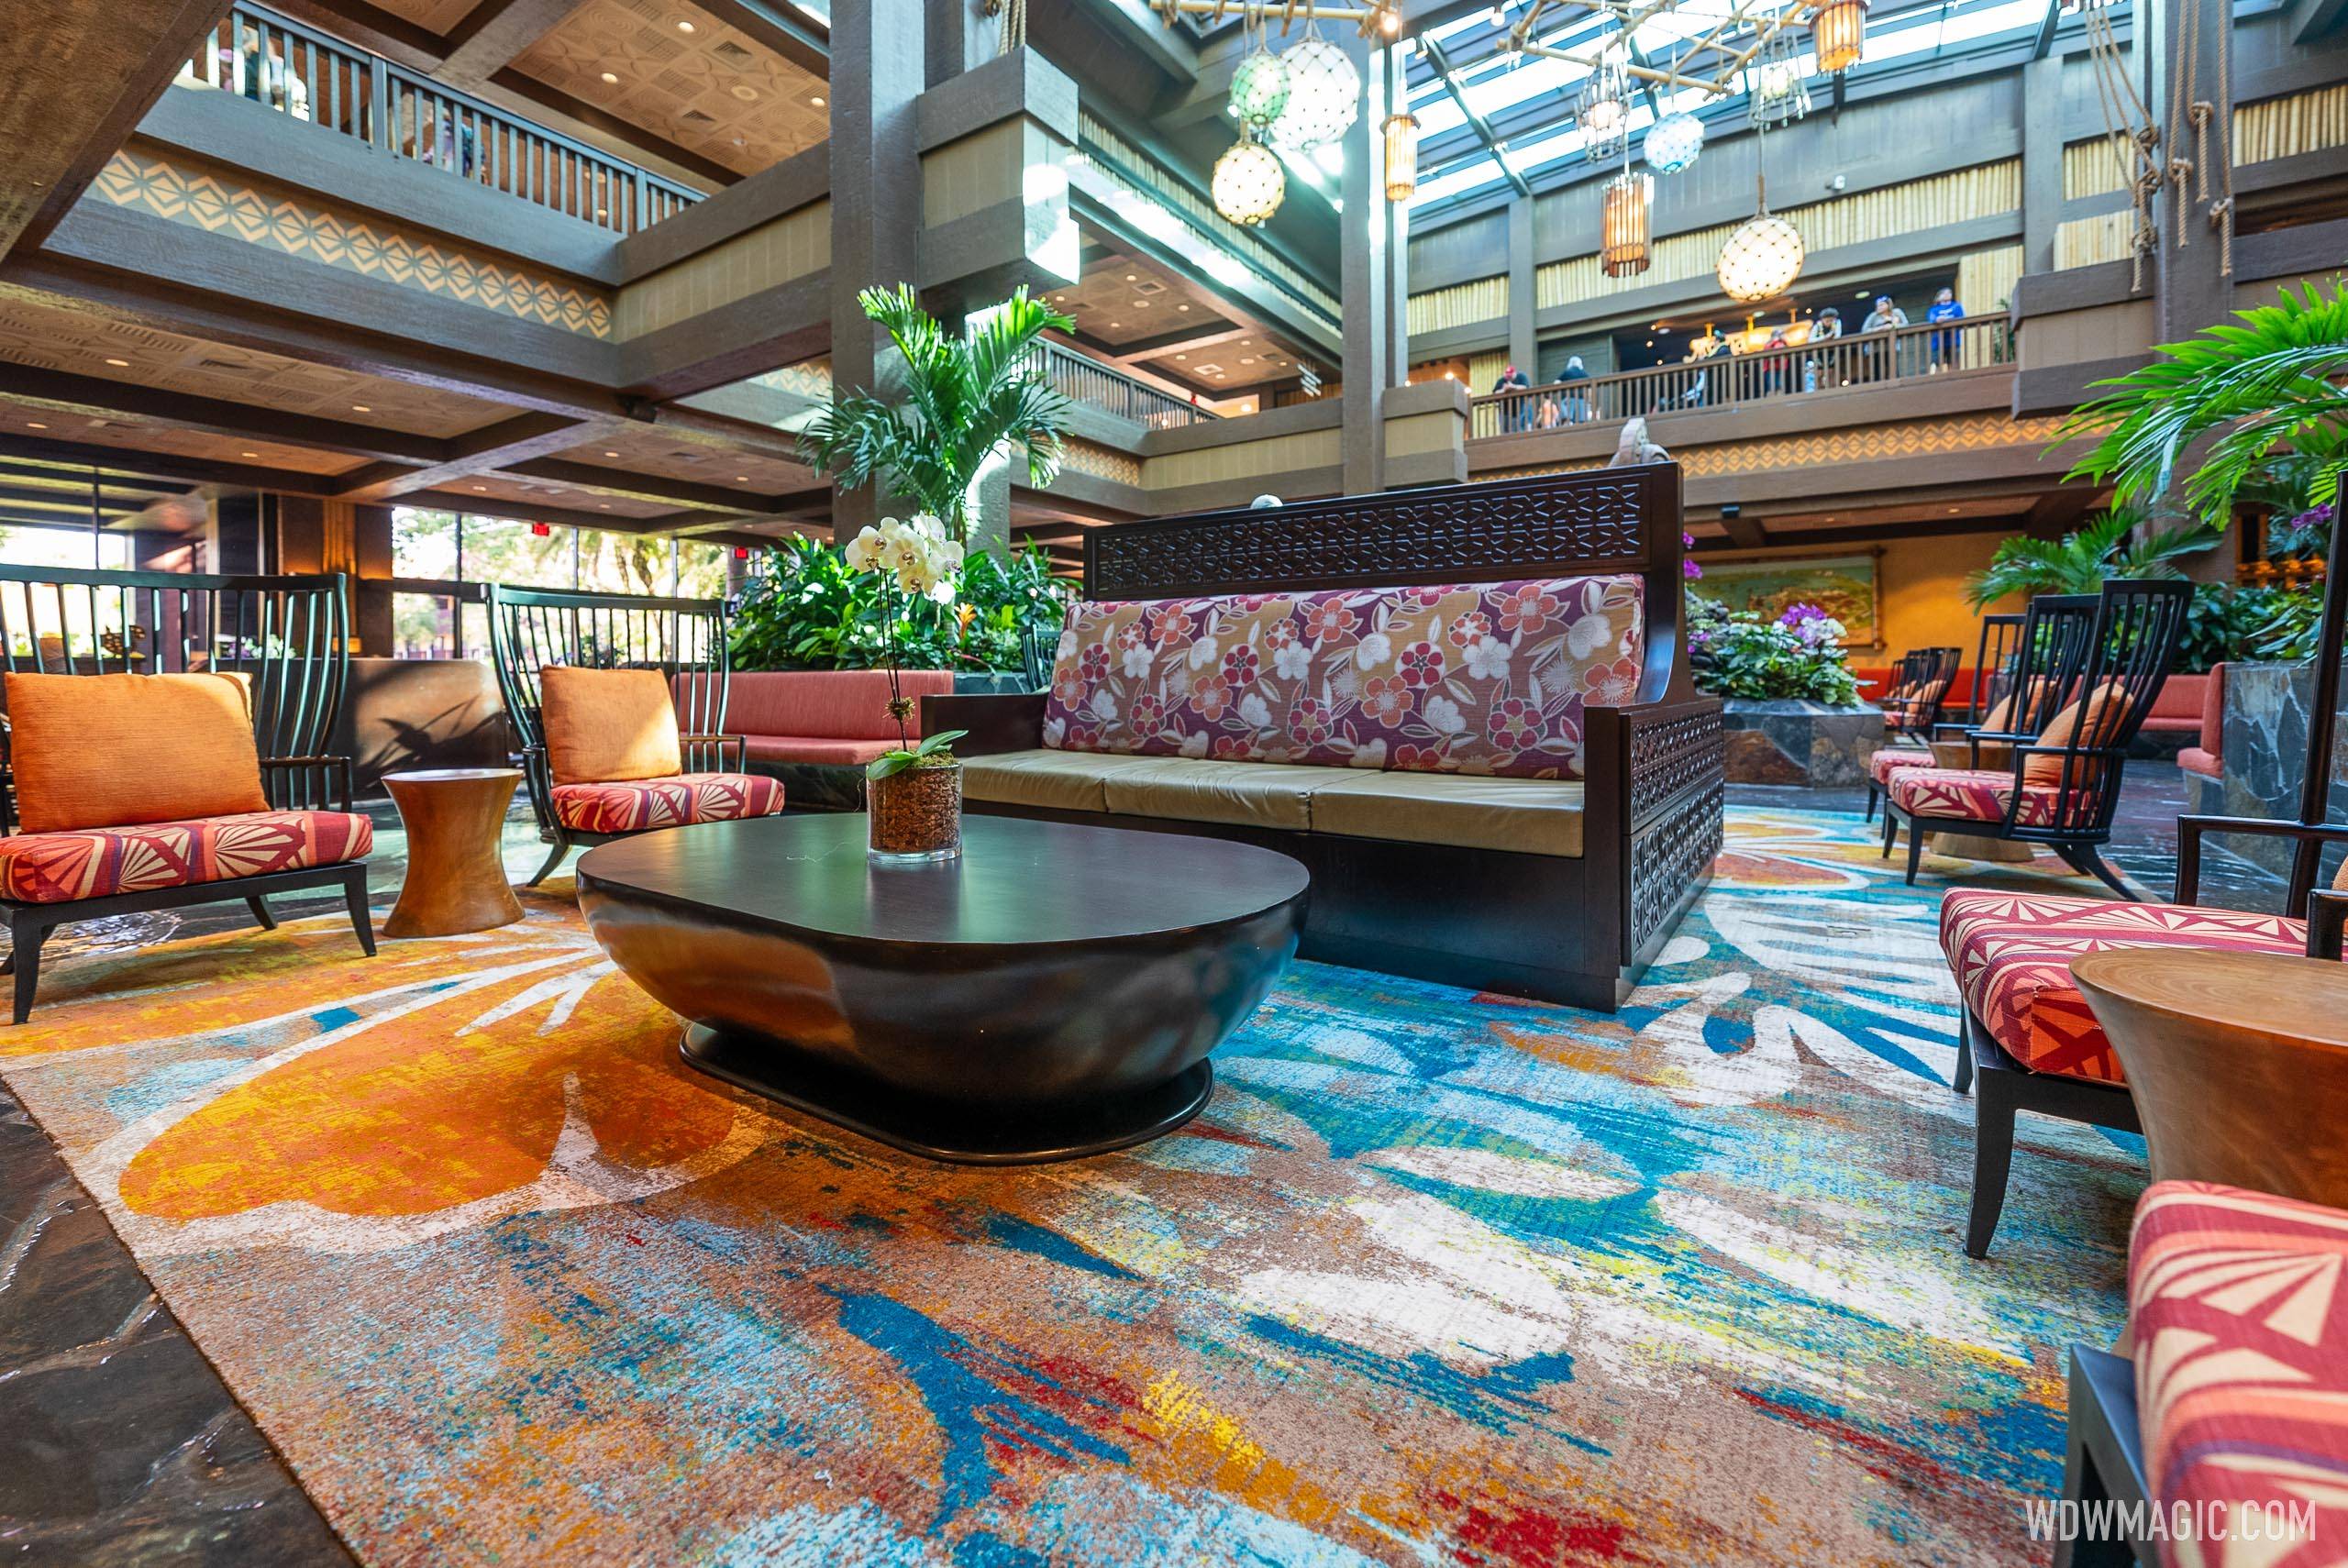 New rug color scheme at Disney's Polynesian Village Resort lobby